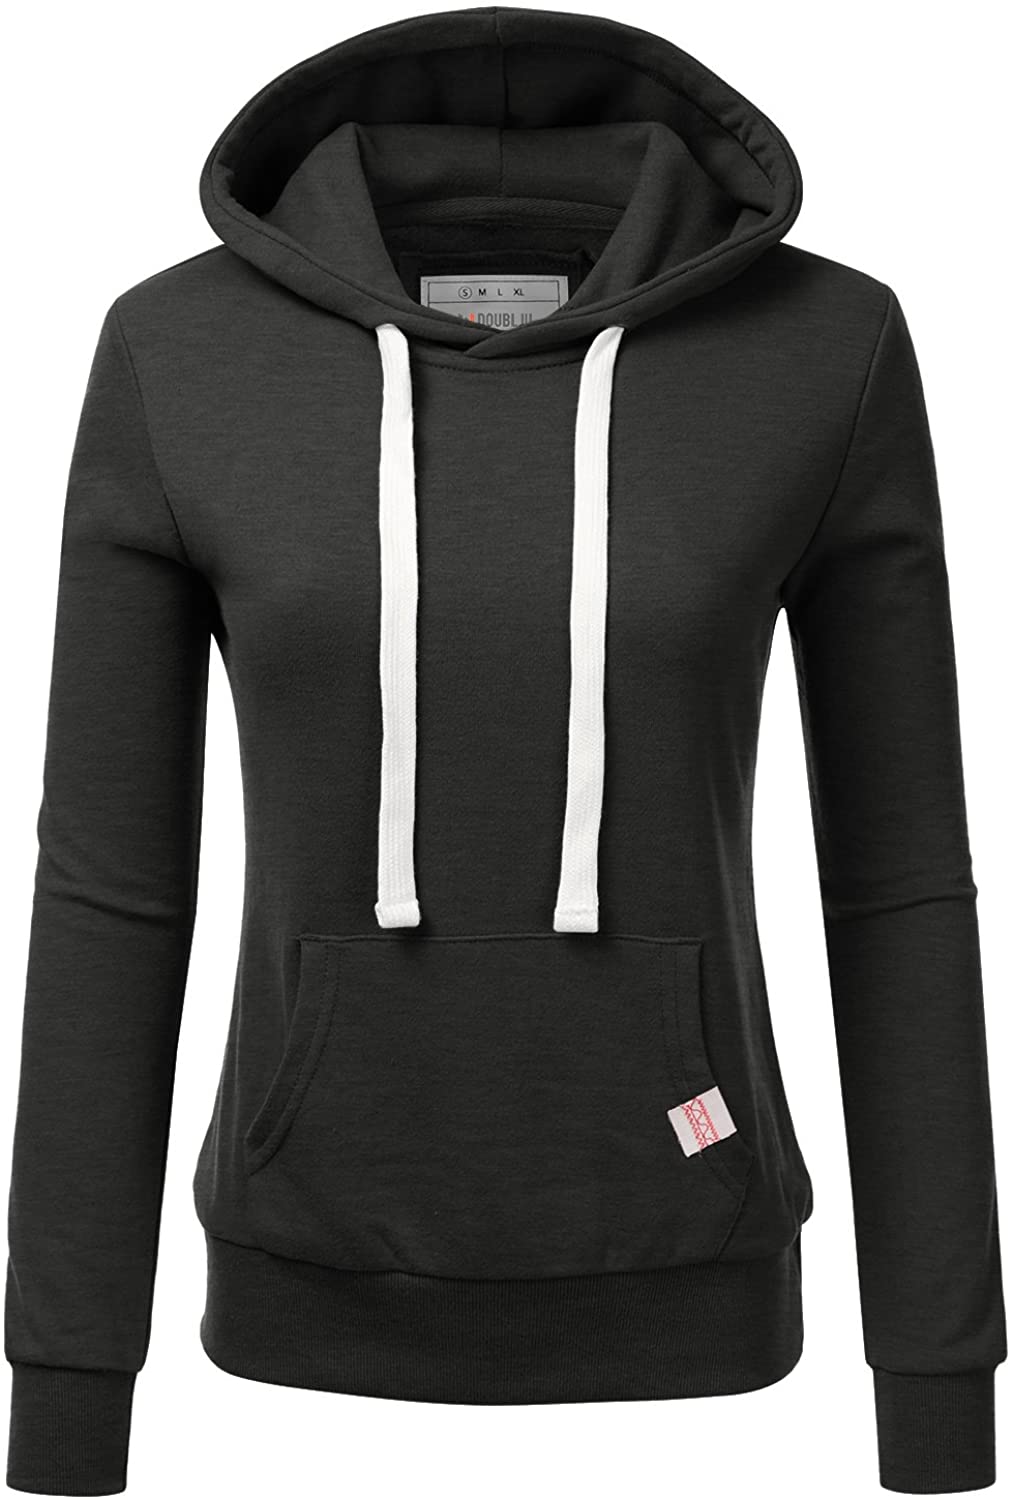 Doublju Basic Lightweight Pullover Hoodie Sweatshirt for Women 